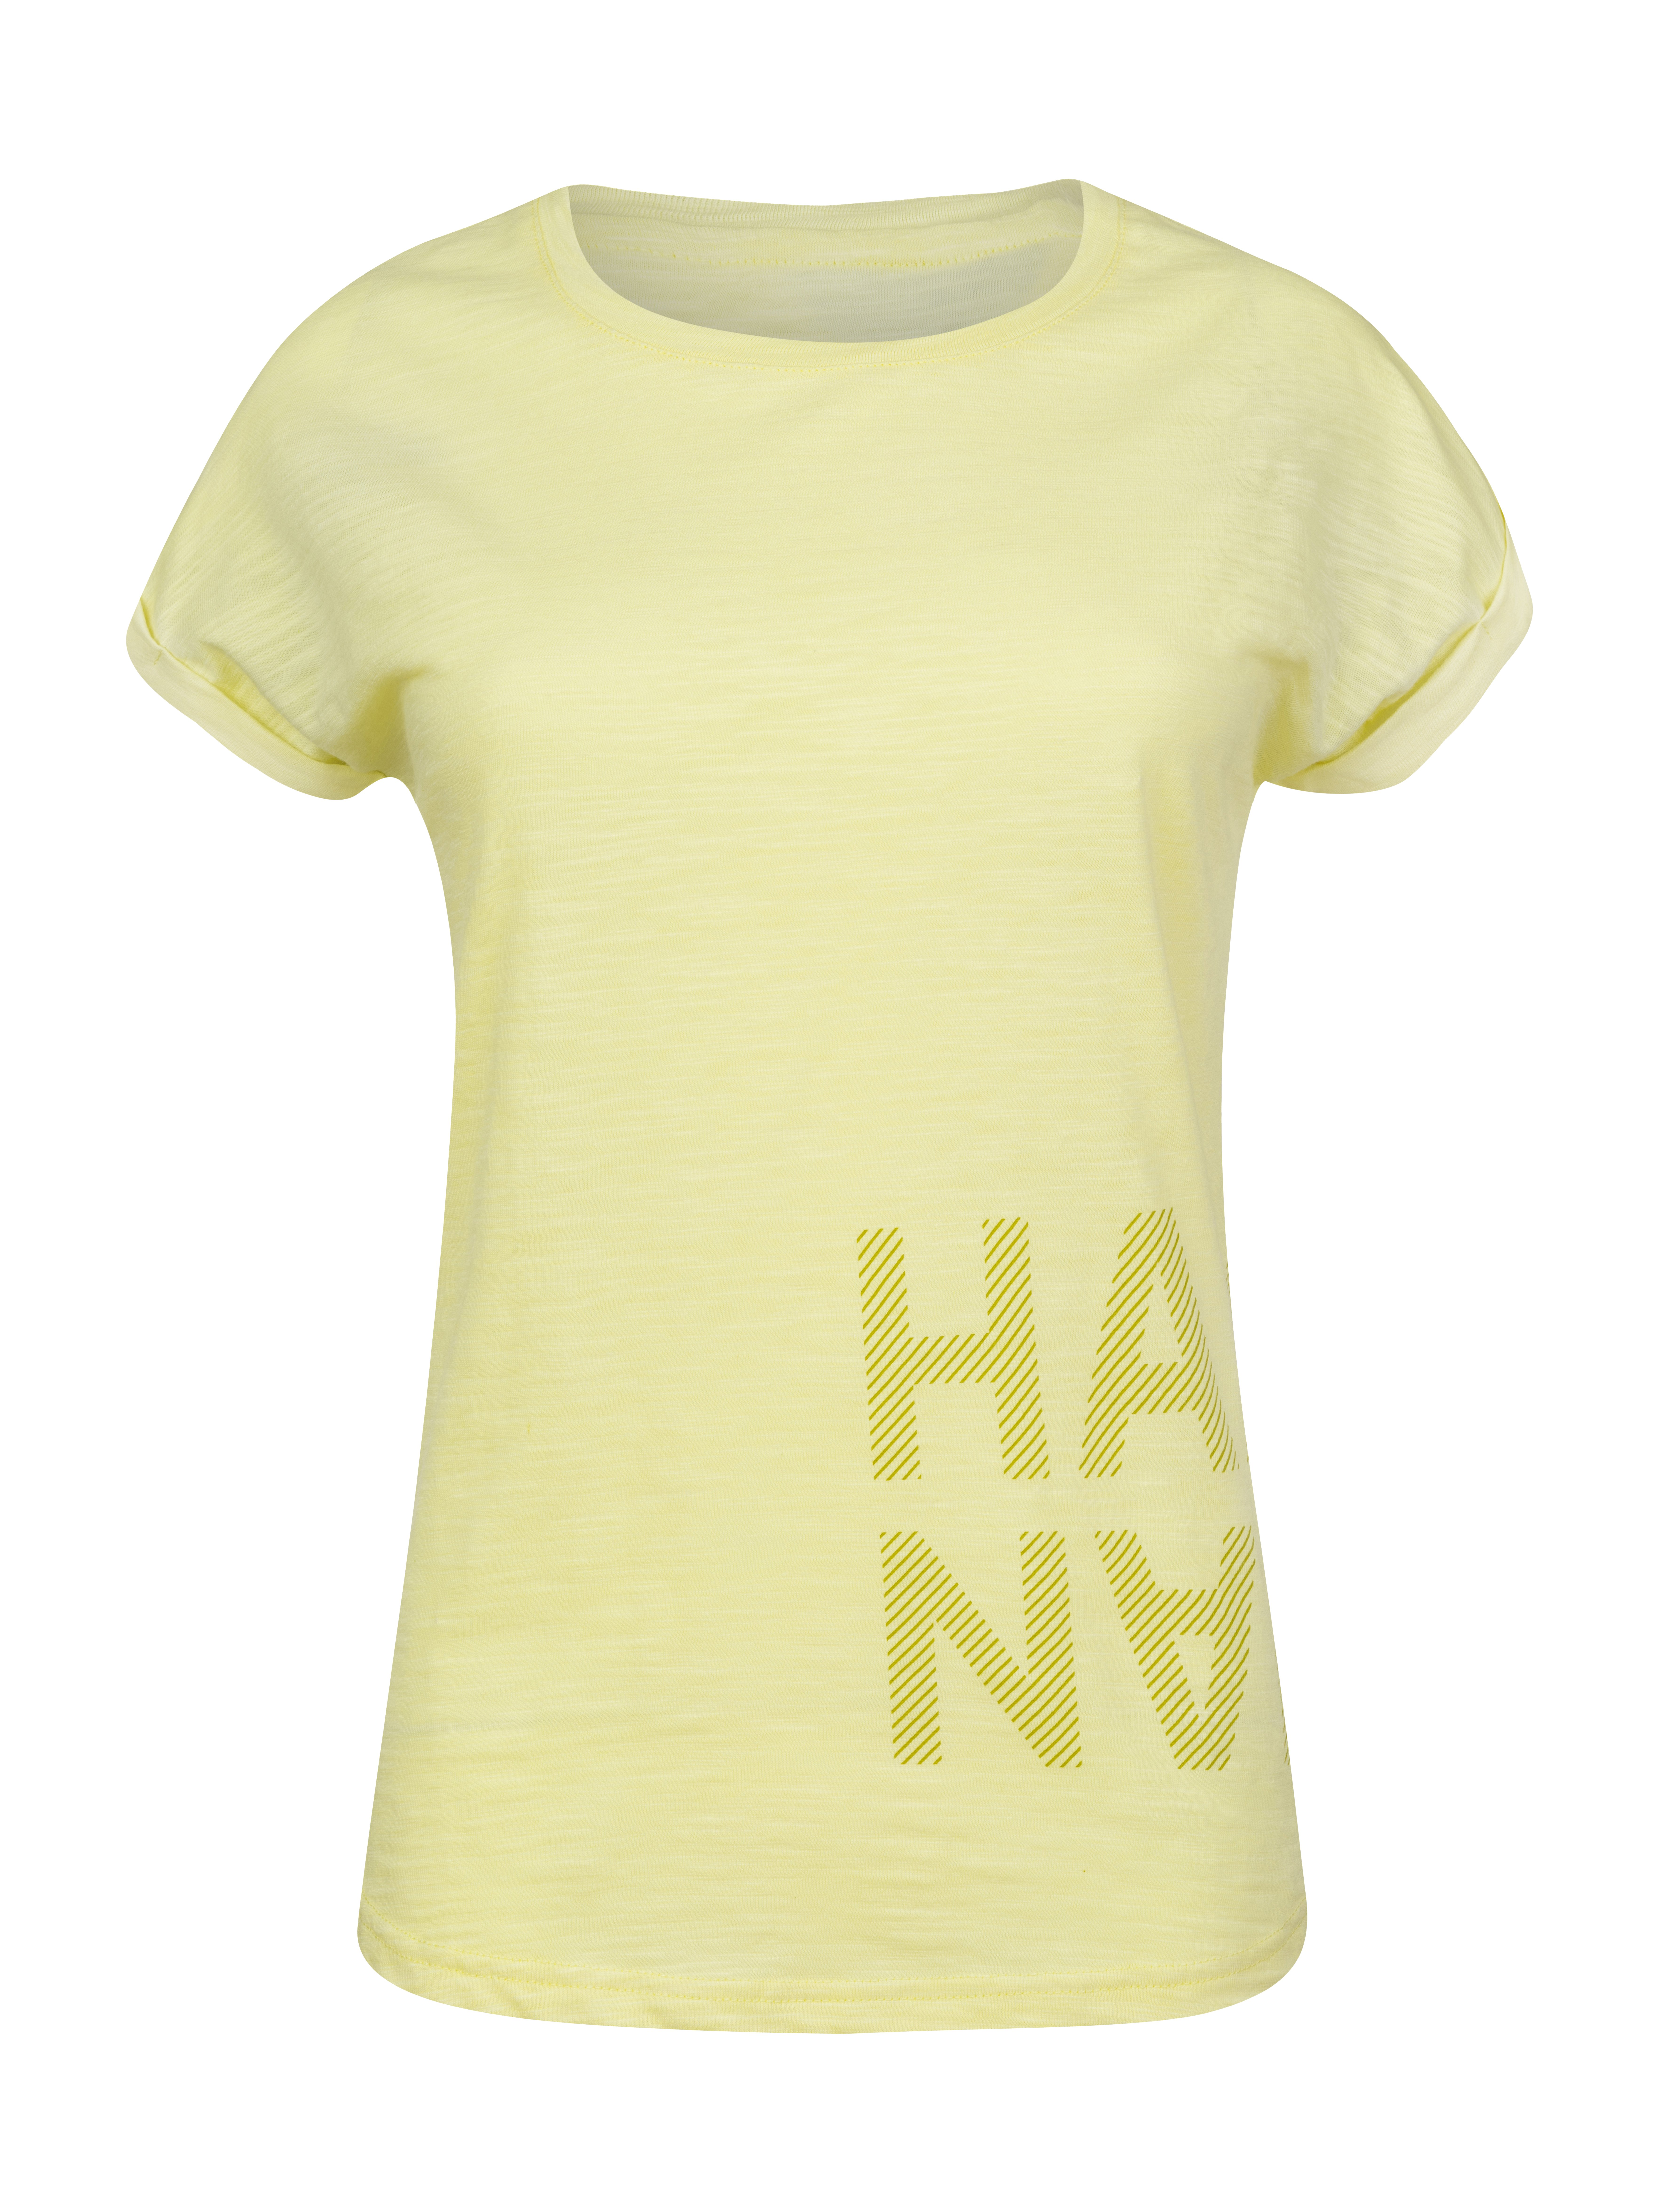 Women's T-shirt Hannah ARISSA II chardonnay